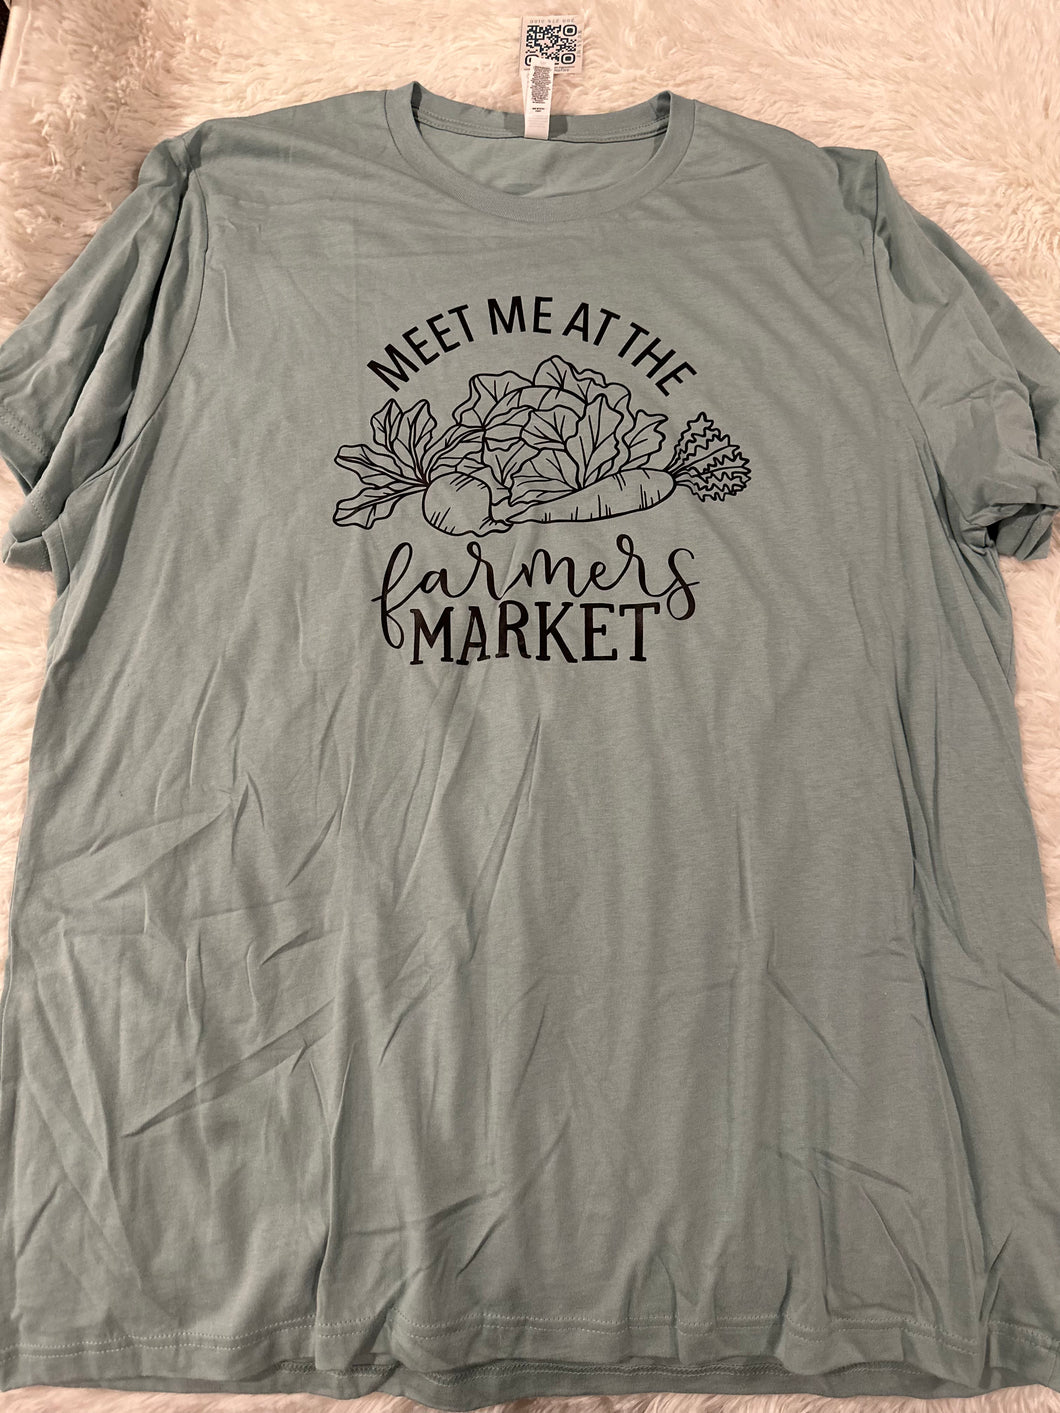 Meet Me At the Farmers Market T-Shirt - 2XL